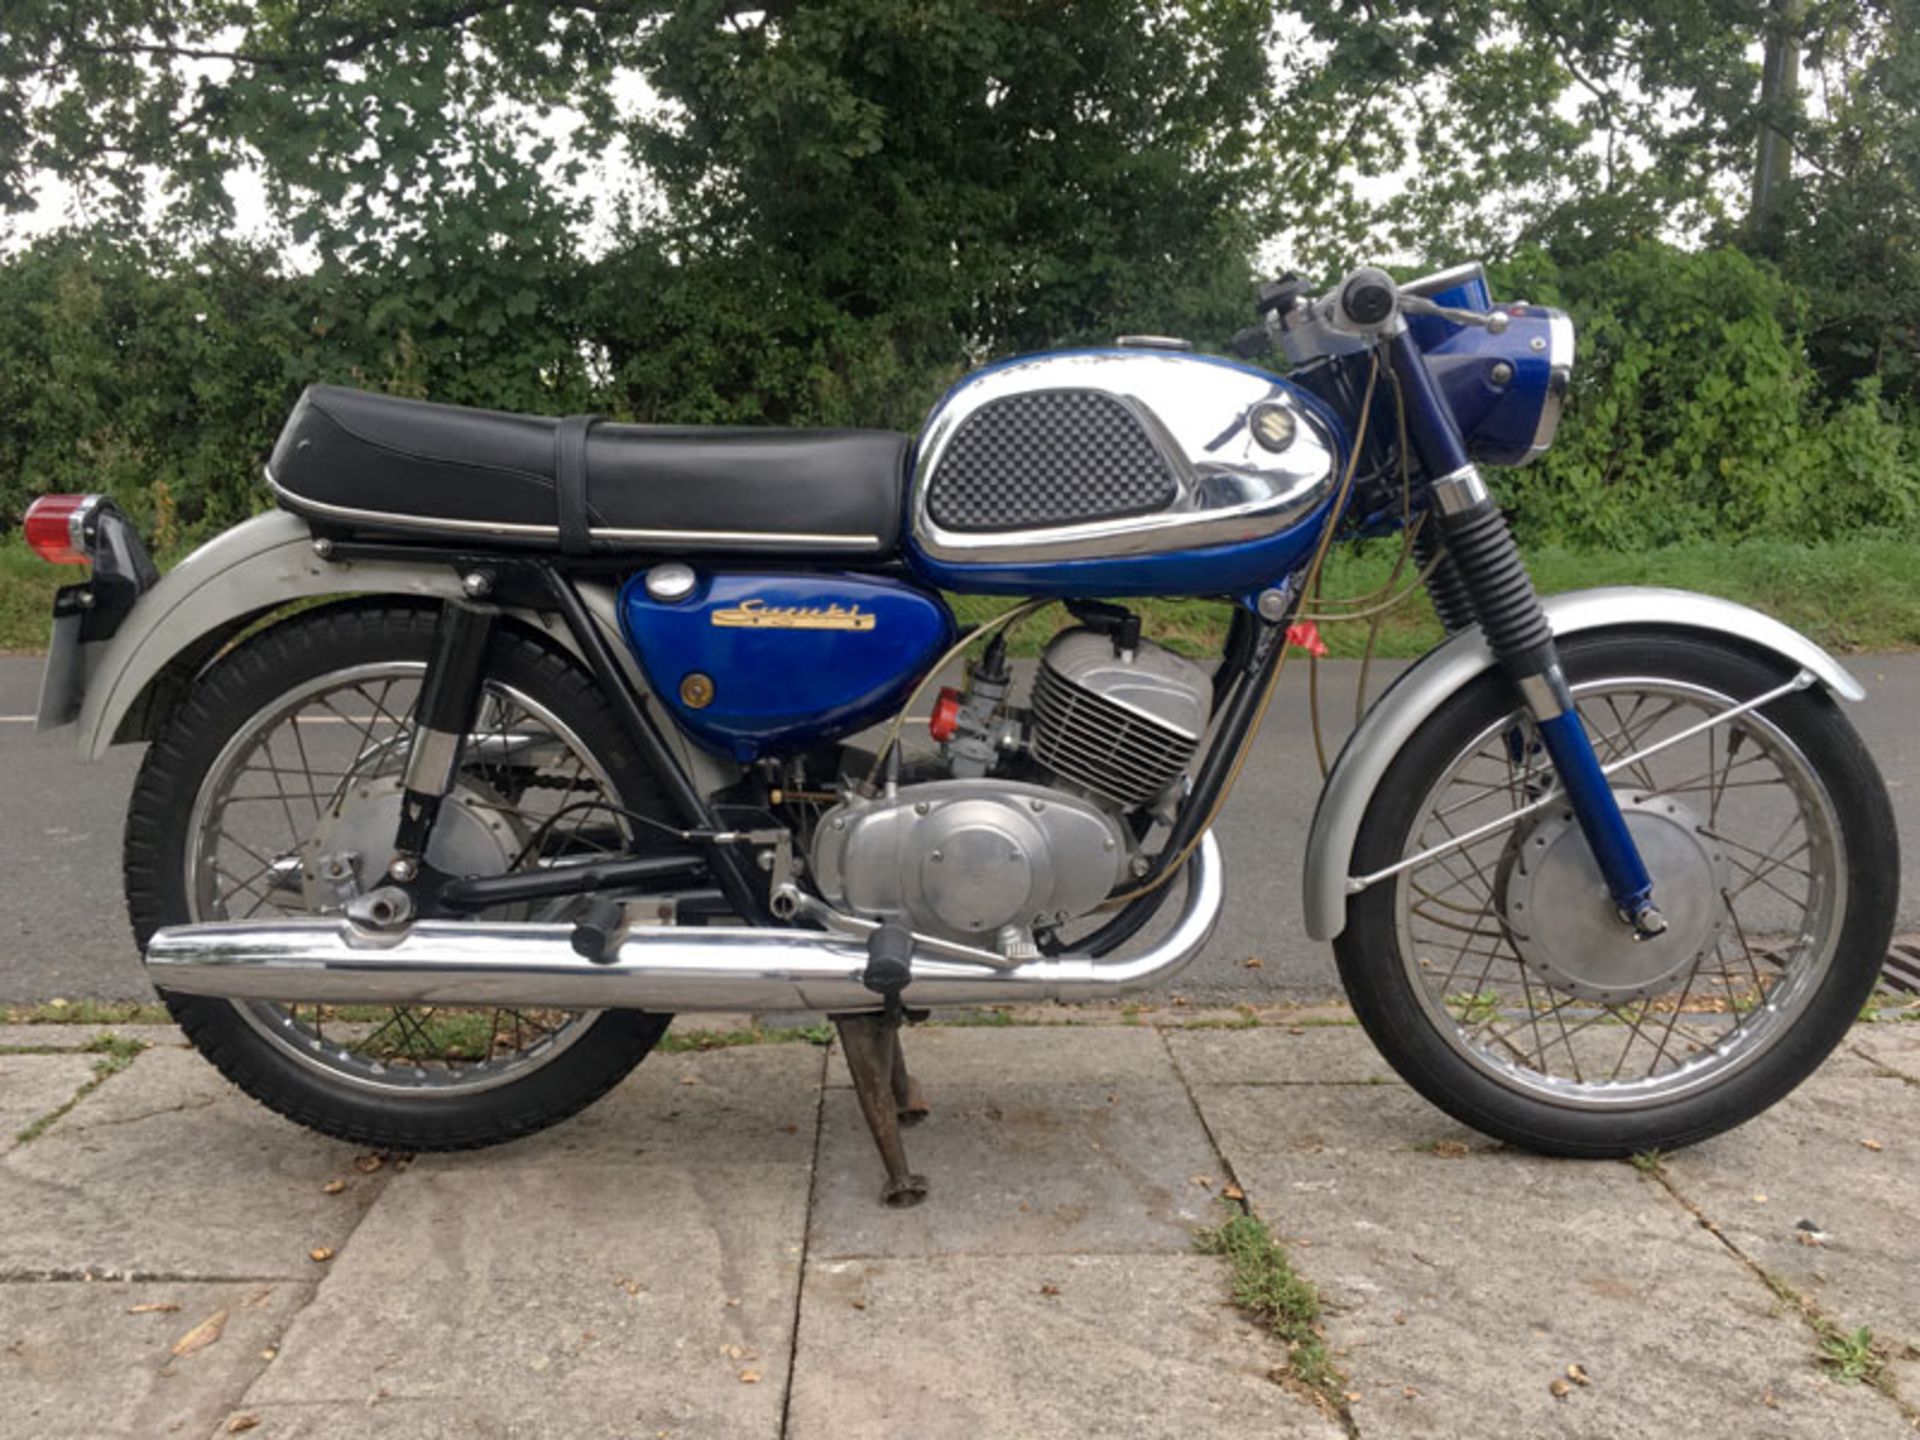 1967 Suzuki T20 - Image 2 of 4